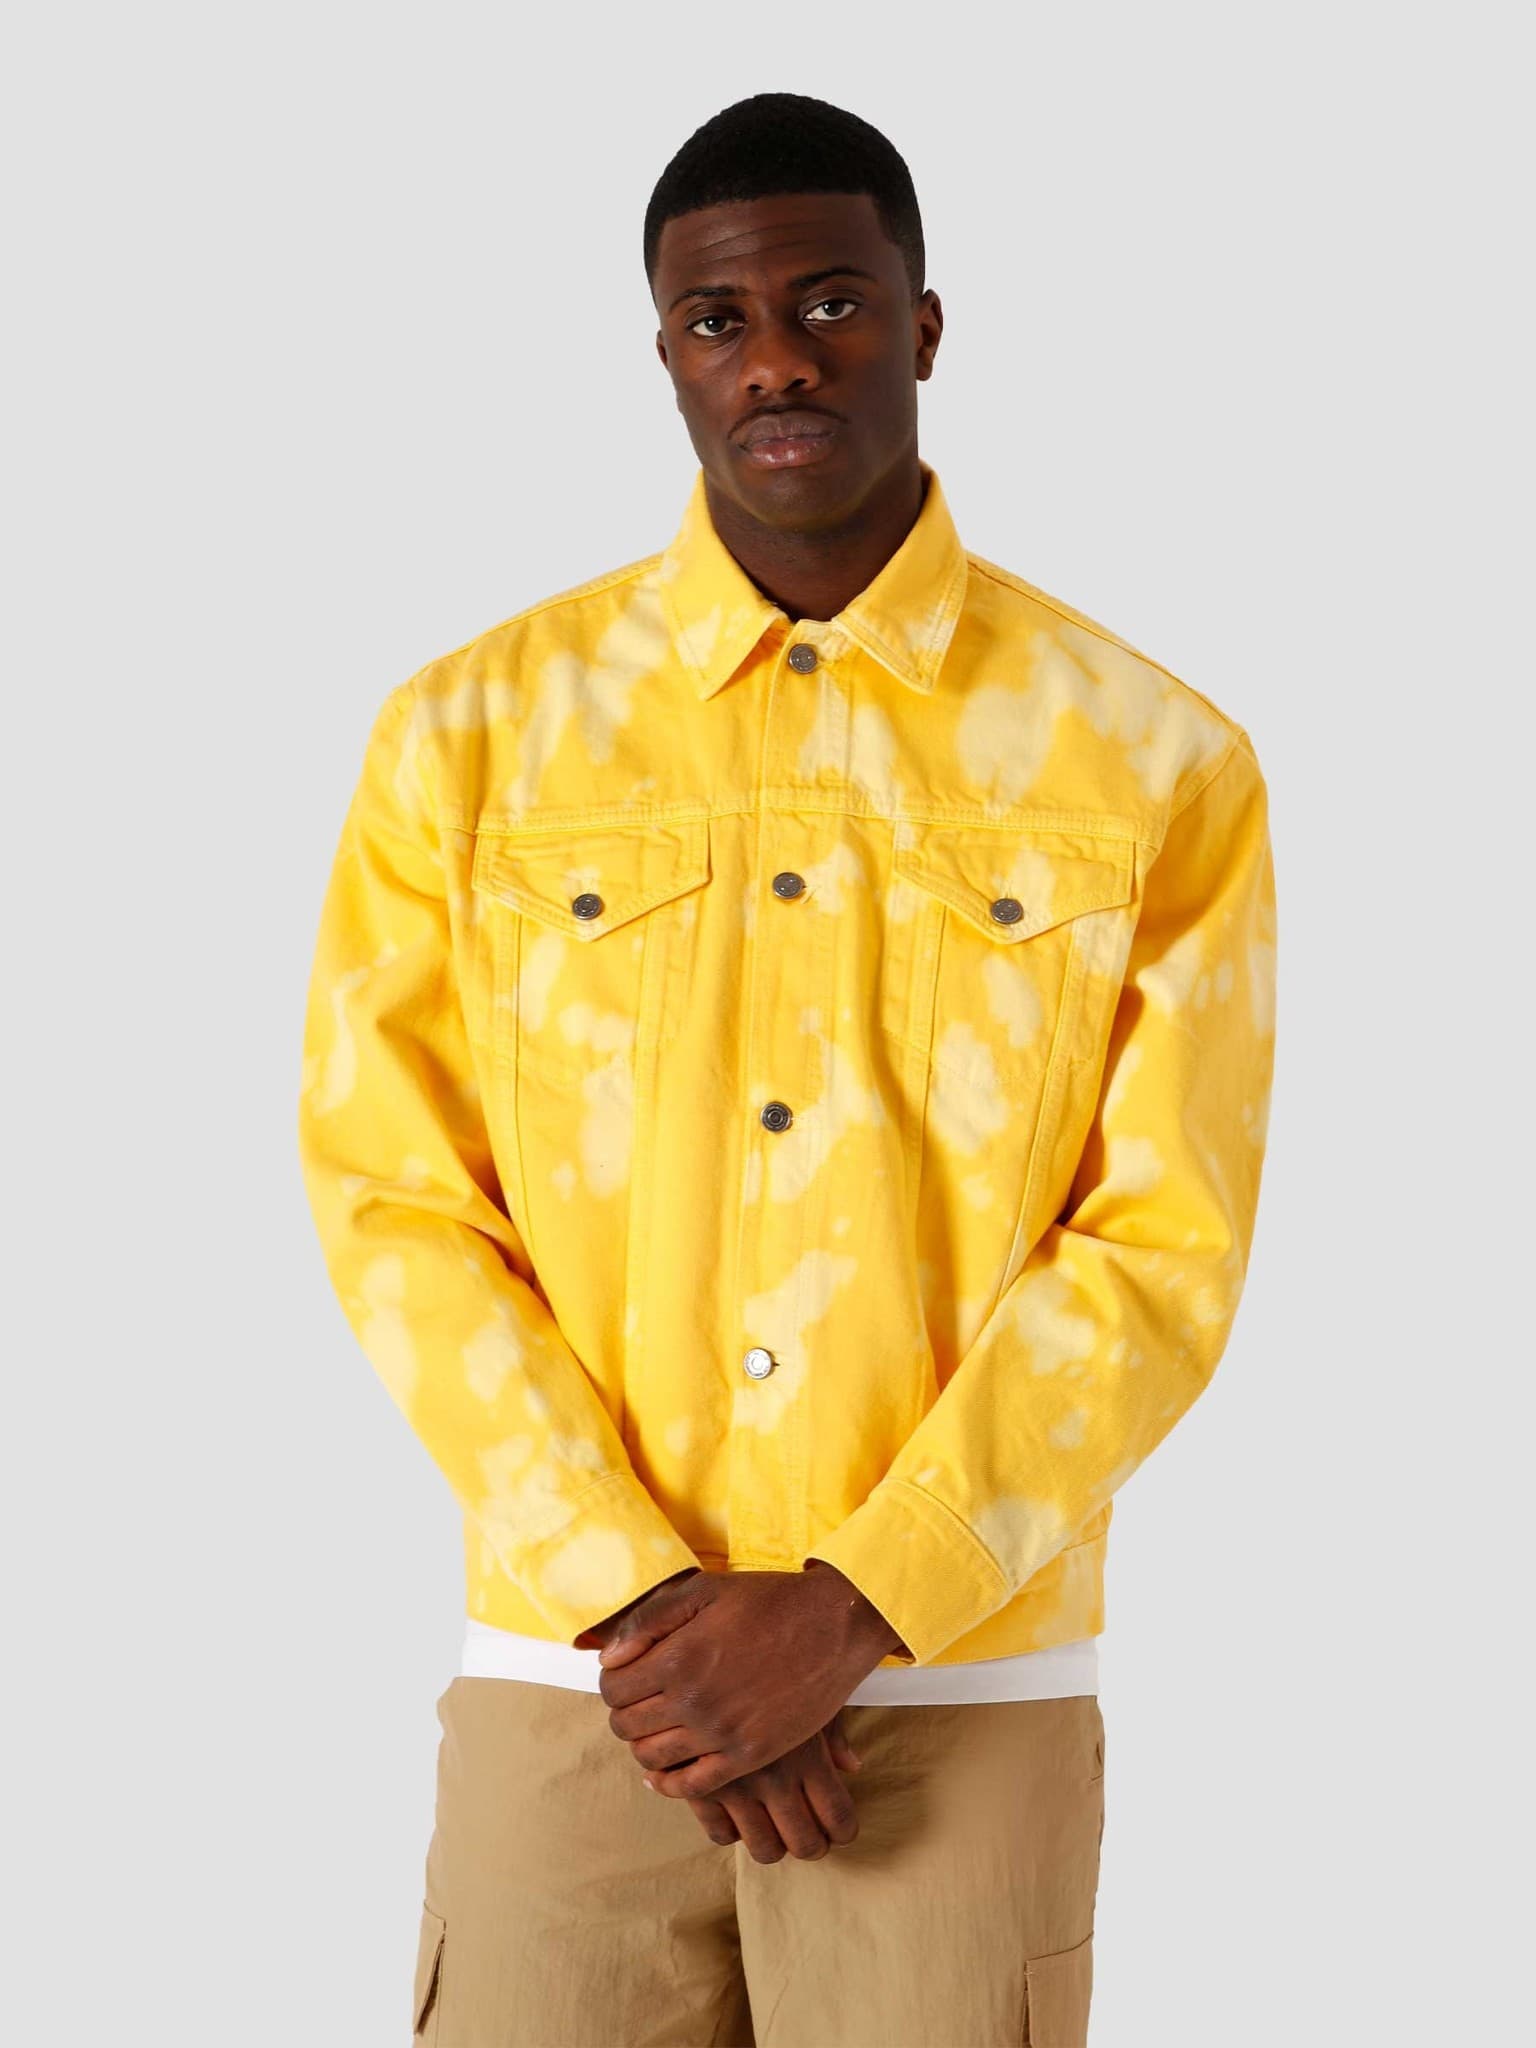 Spring Autumn Men's Jeans Coat Denim Clothing Fashion Jacket Casual Outwear  New | eBay